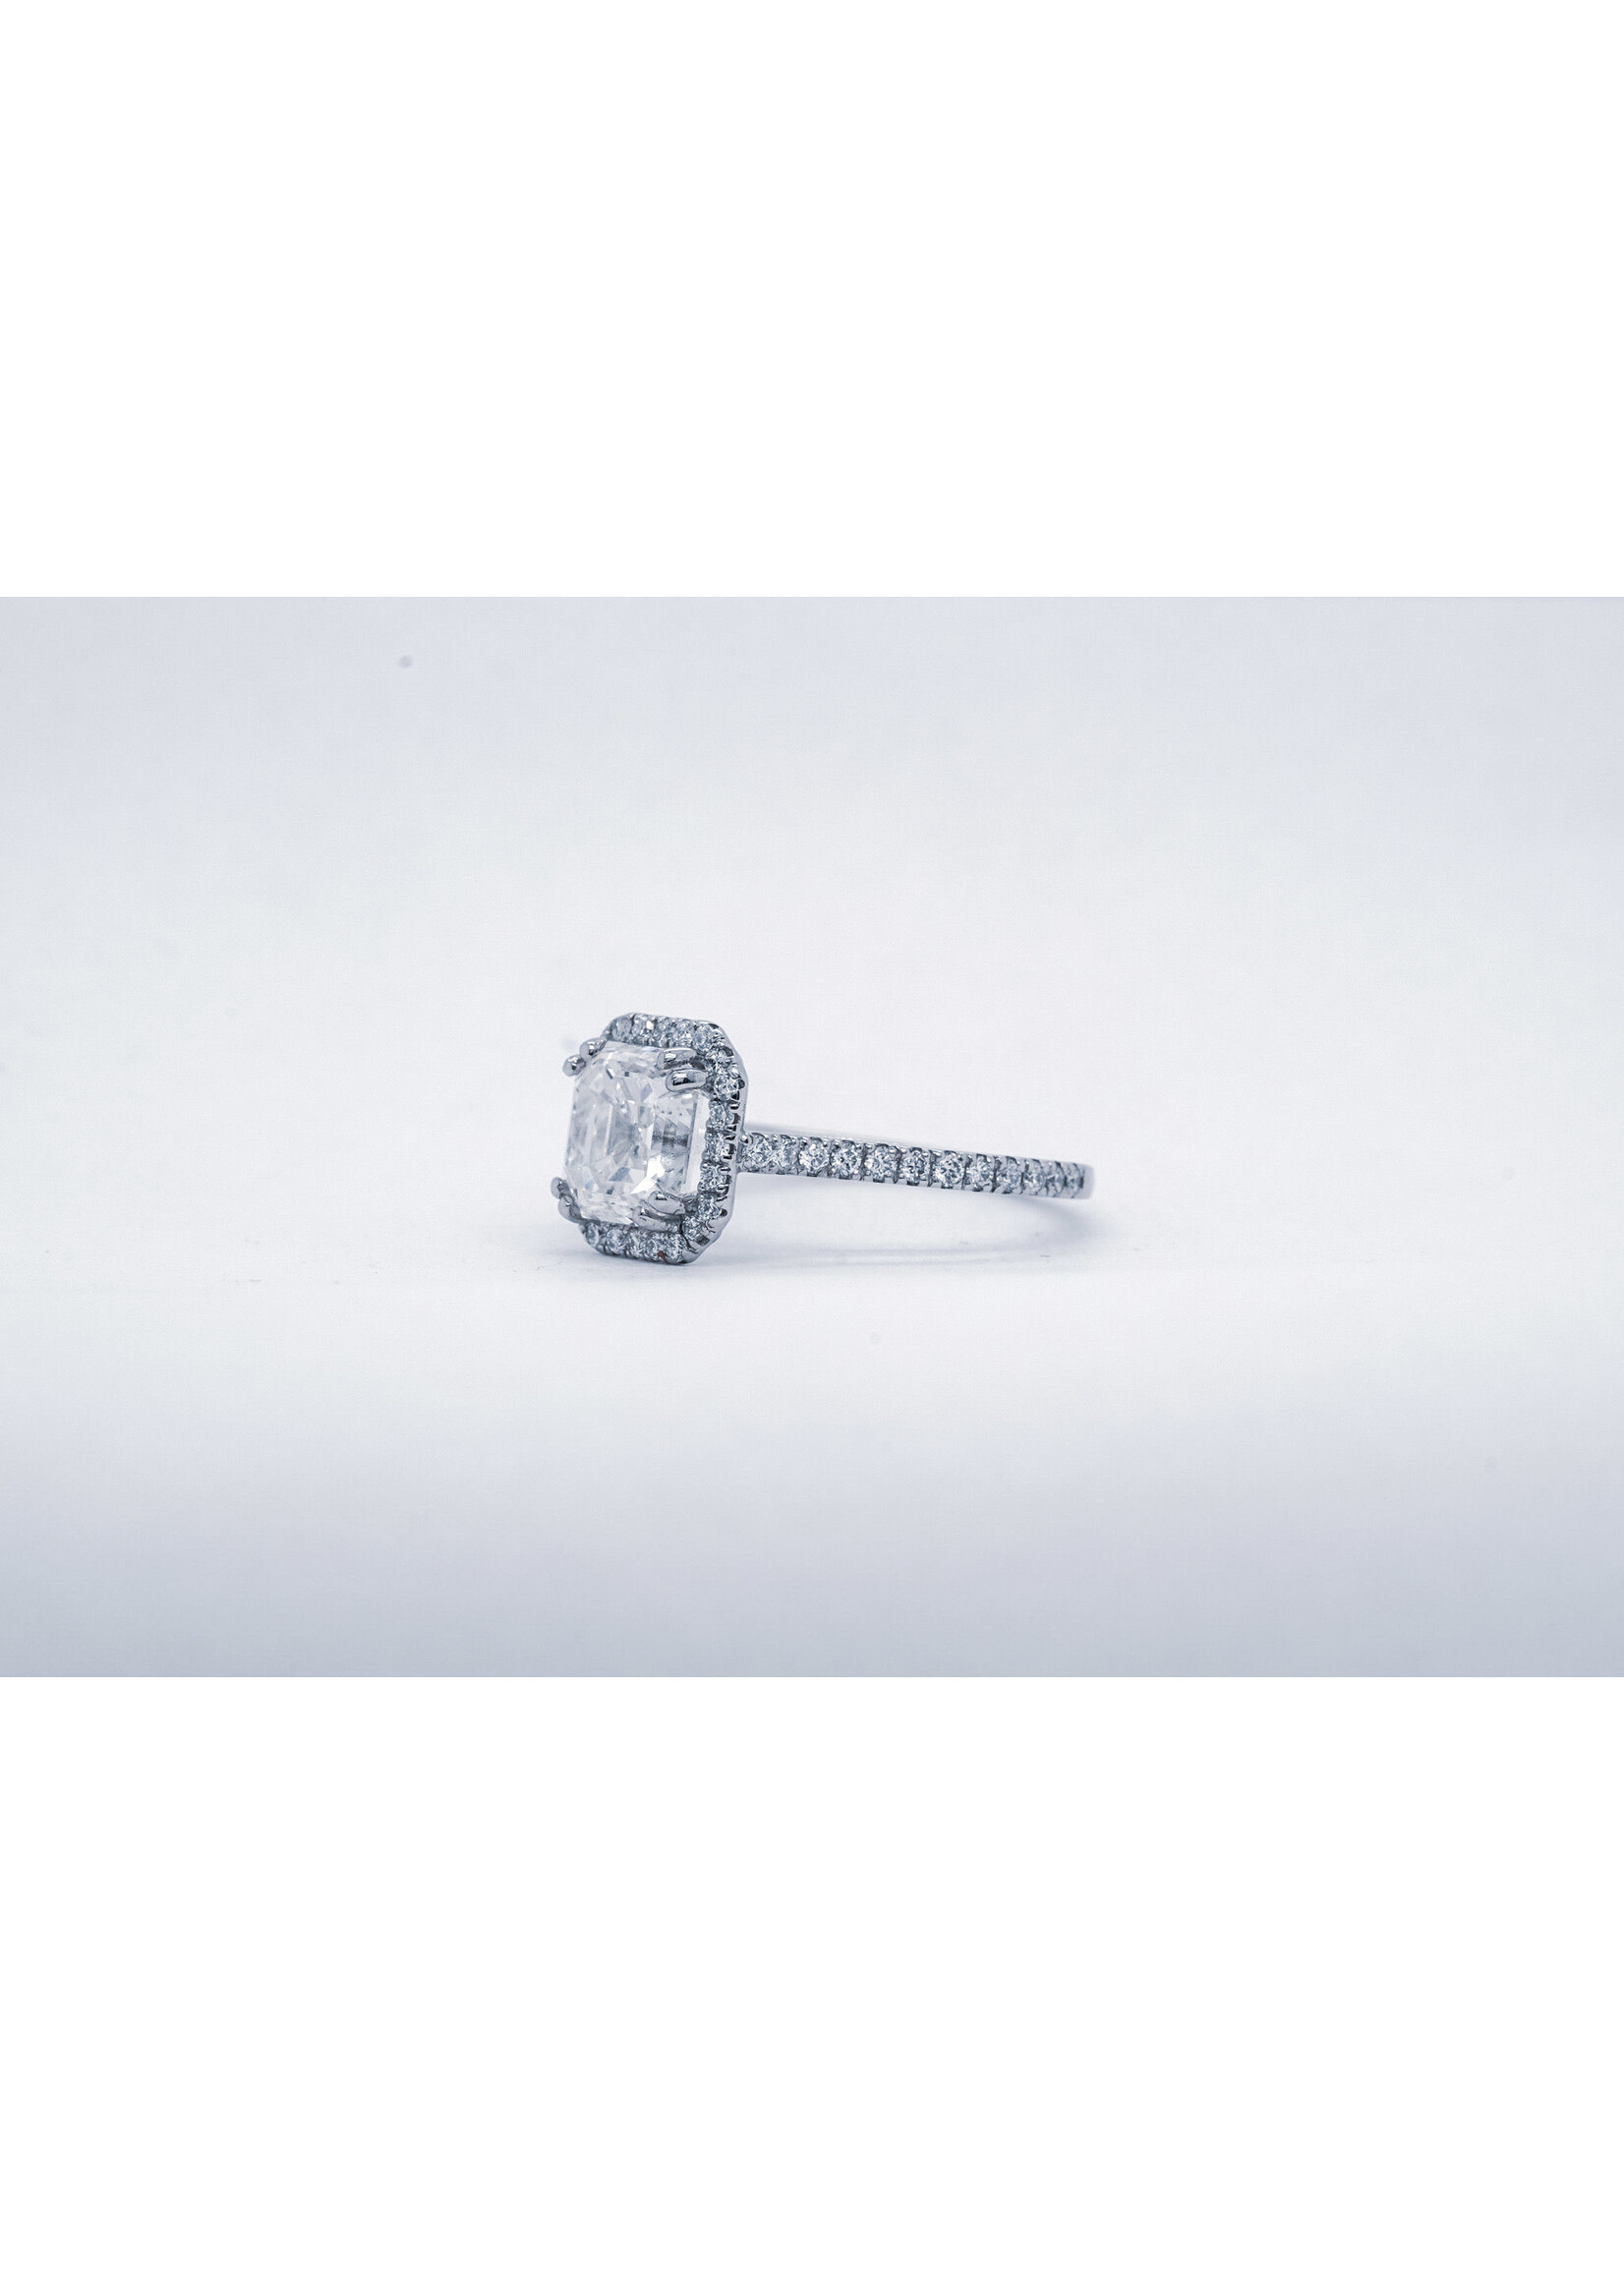 18KW 4.04g 2.93ctw (2.53ctr) F/SI1 Asscher Cut Diamond Halo Engagement Ring (size 5)